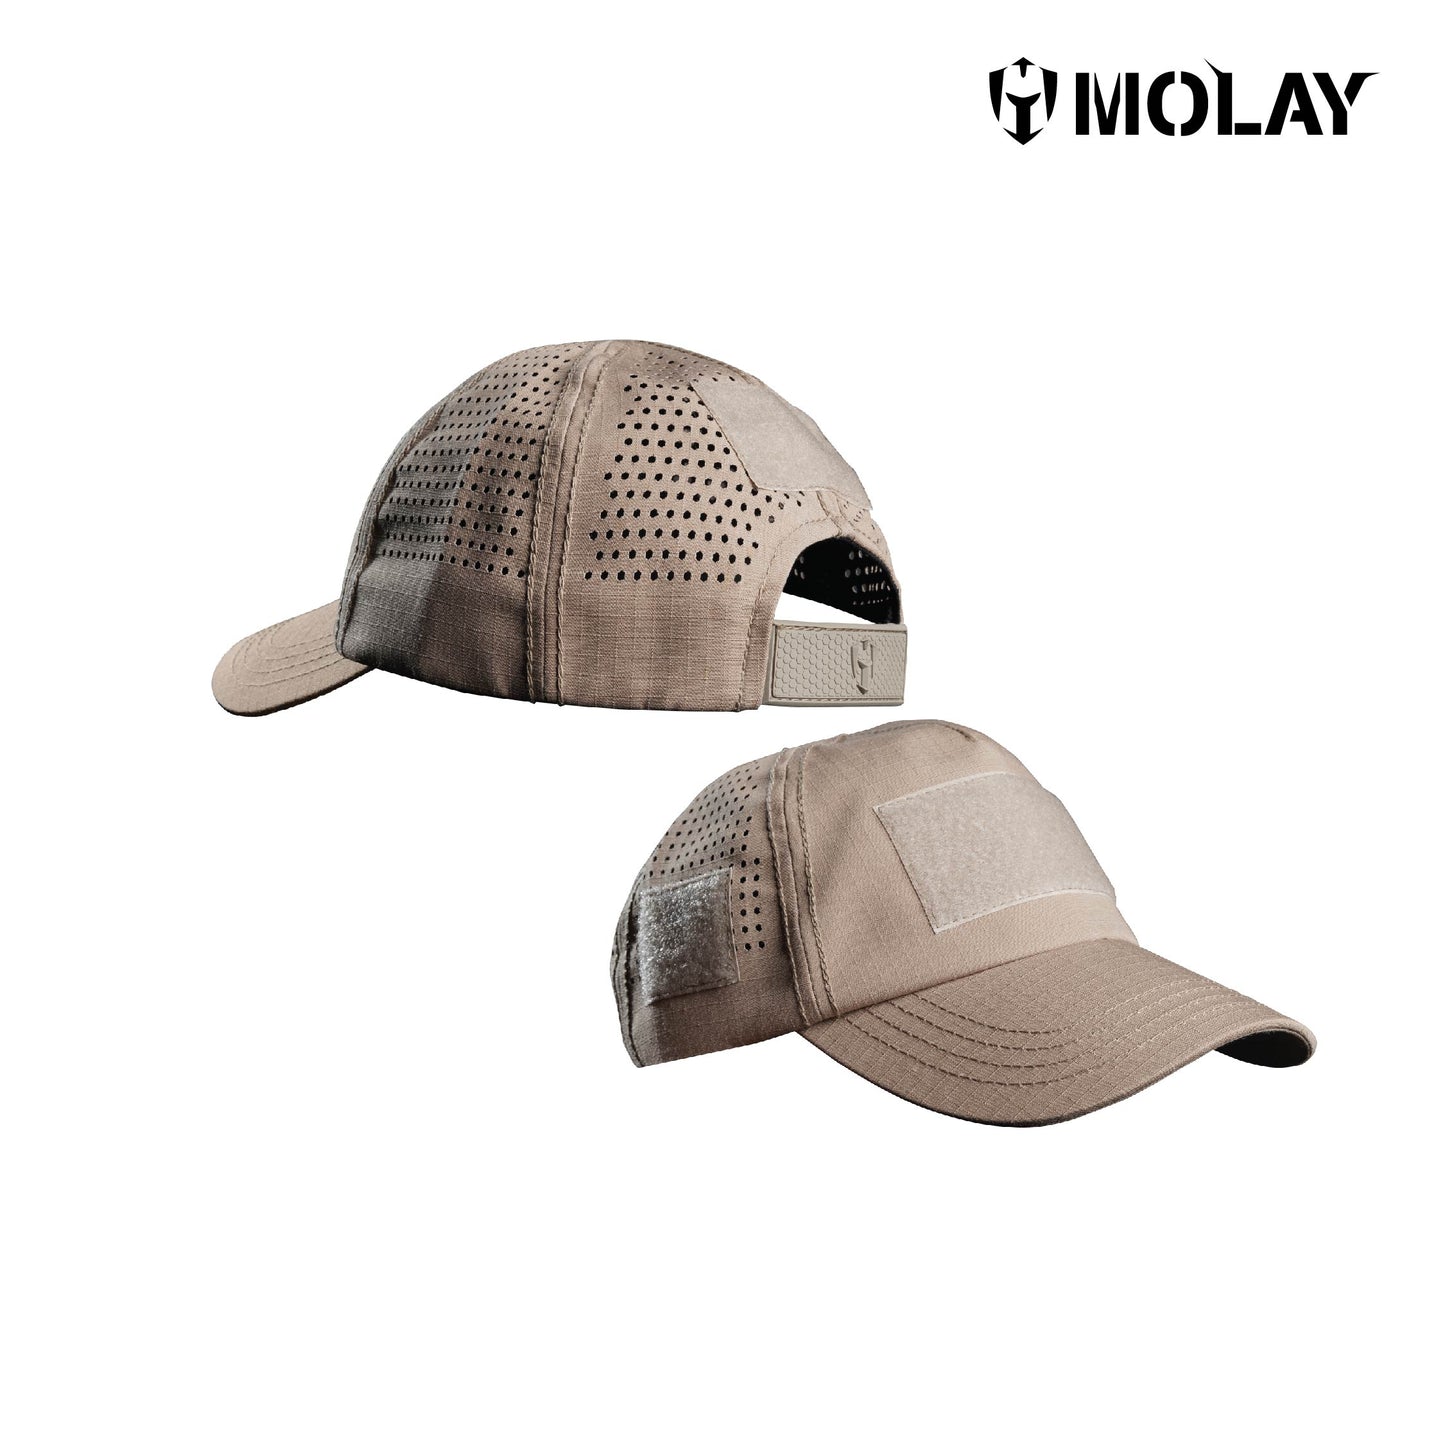 Molay® Aero Tactical Cap MK.II